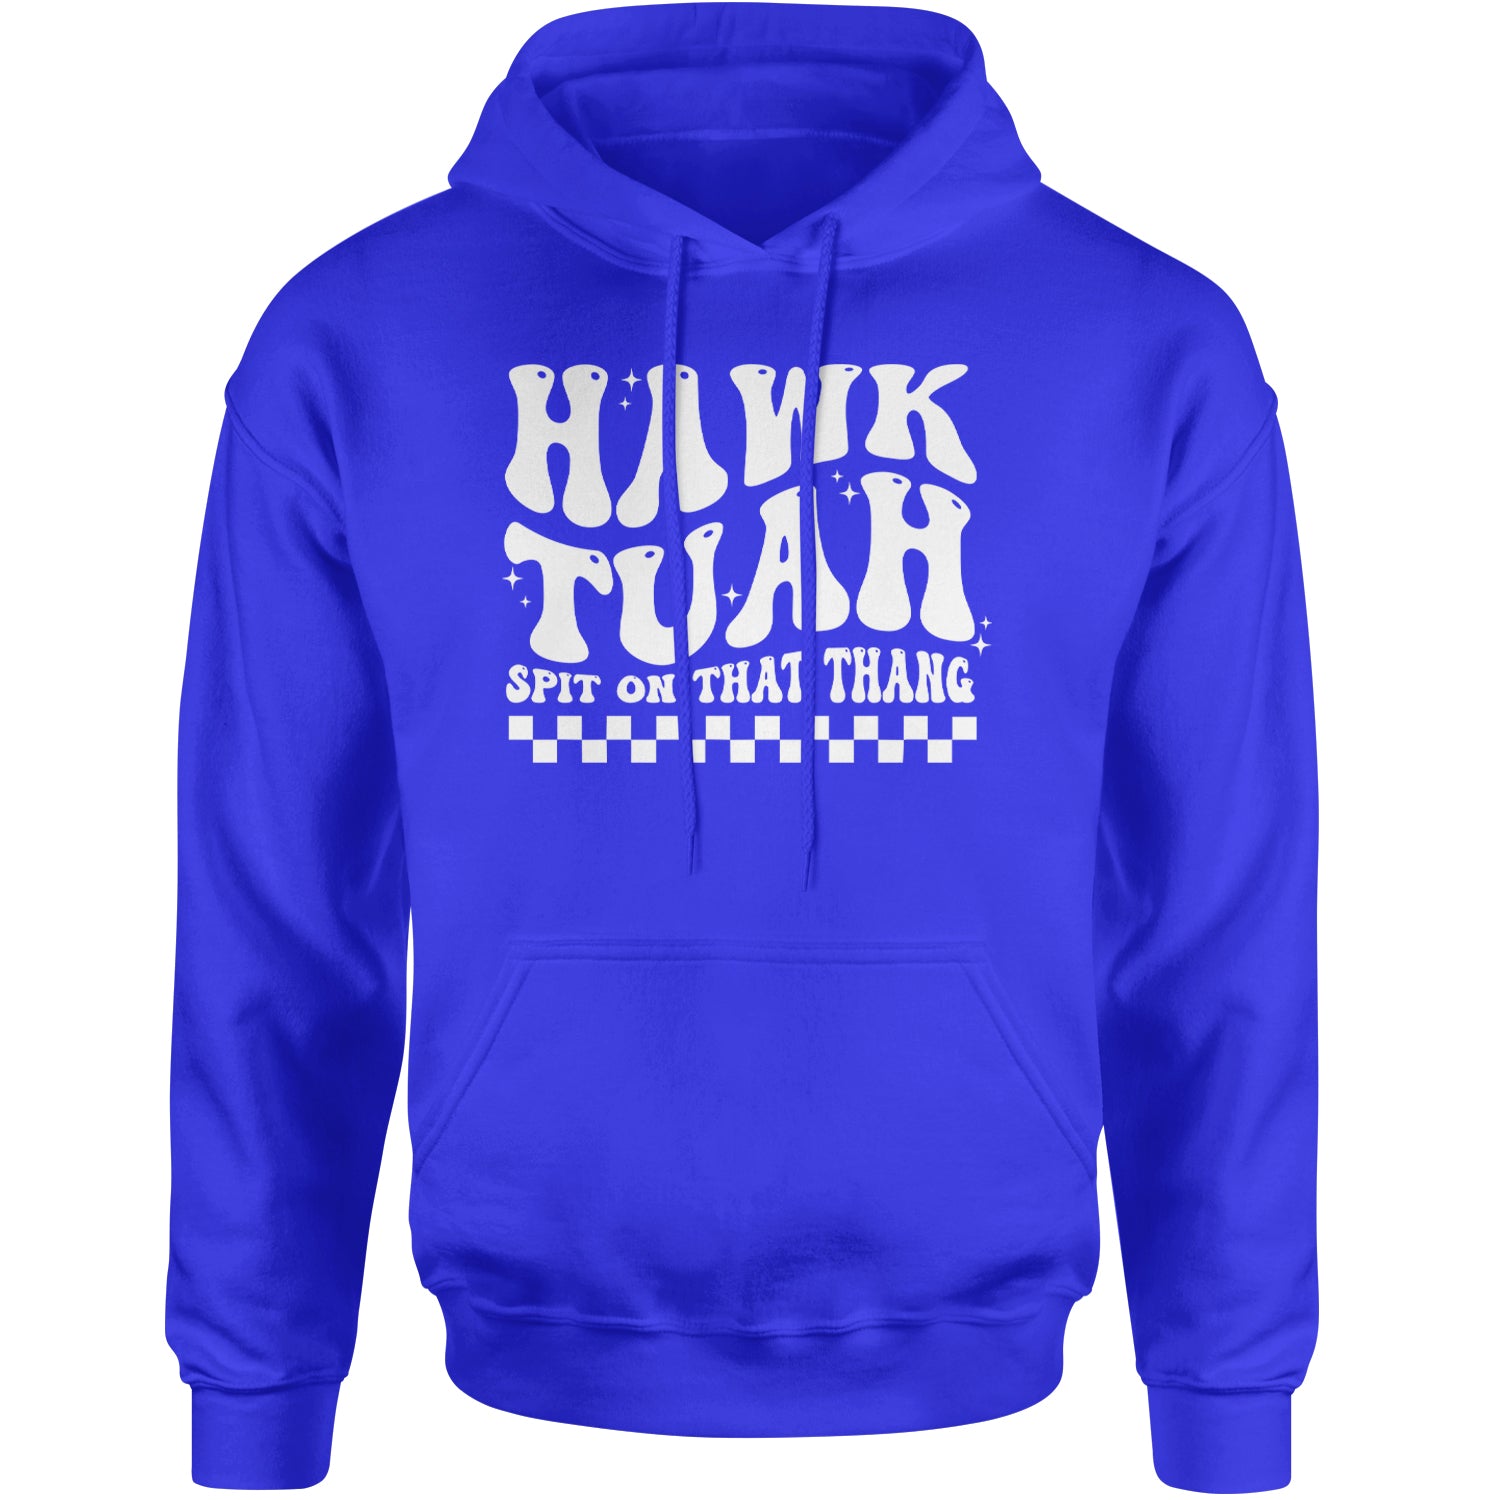 Hawk Tuah Spit On That Thang Adult Hoodie Sweatshirt Royal Blue